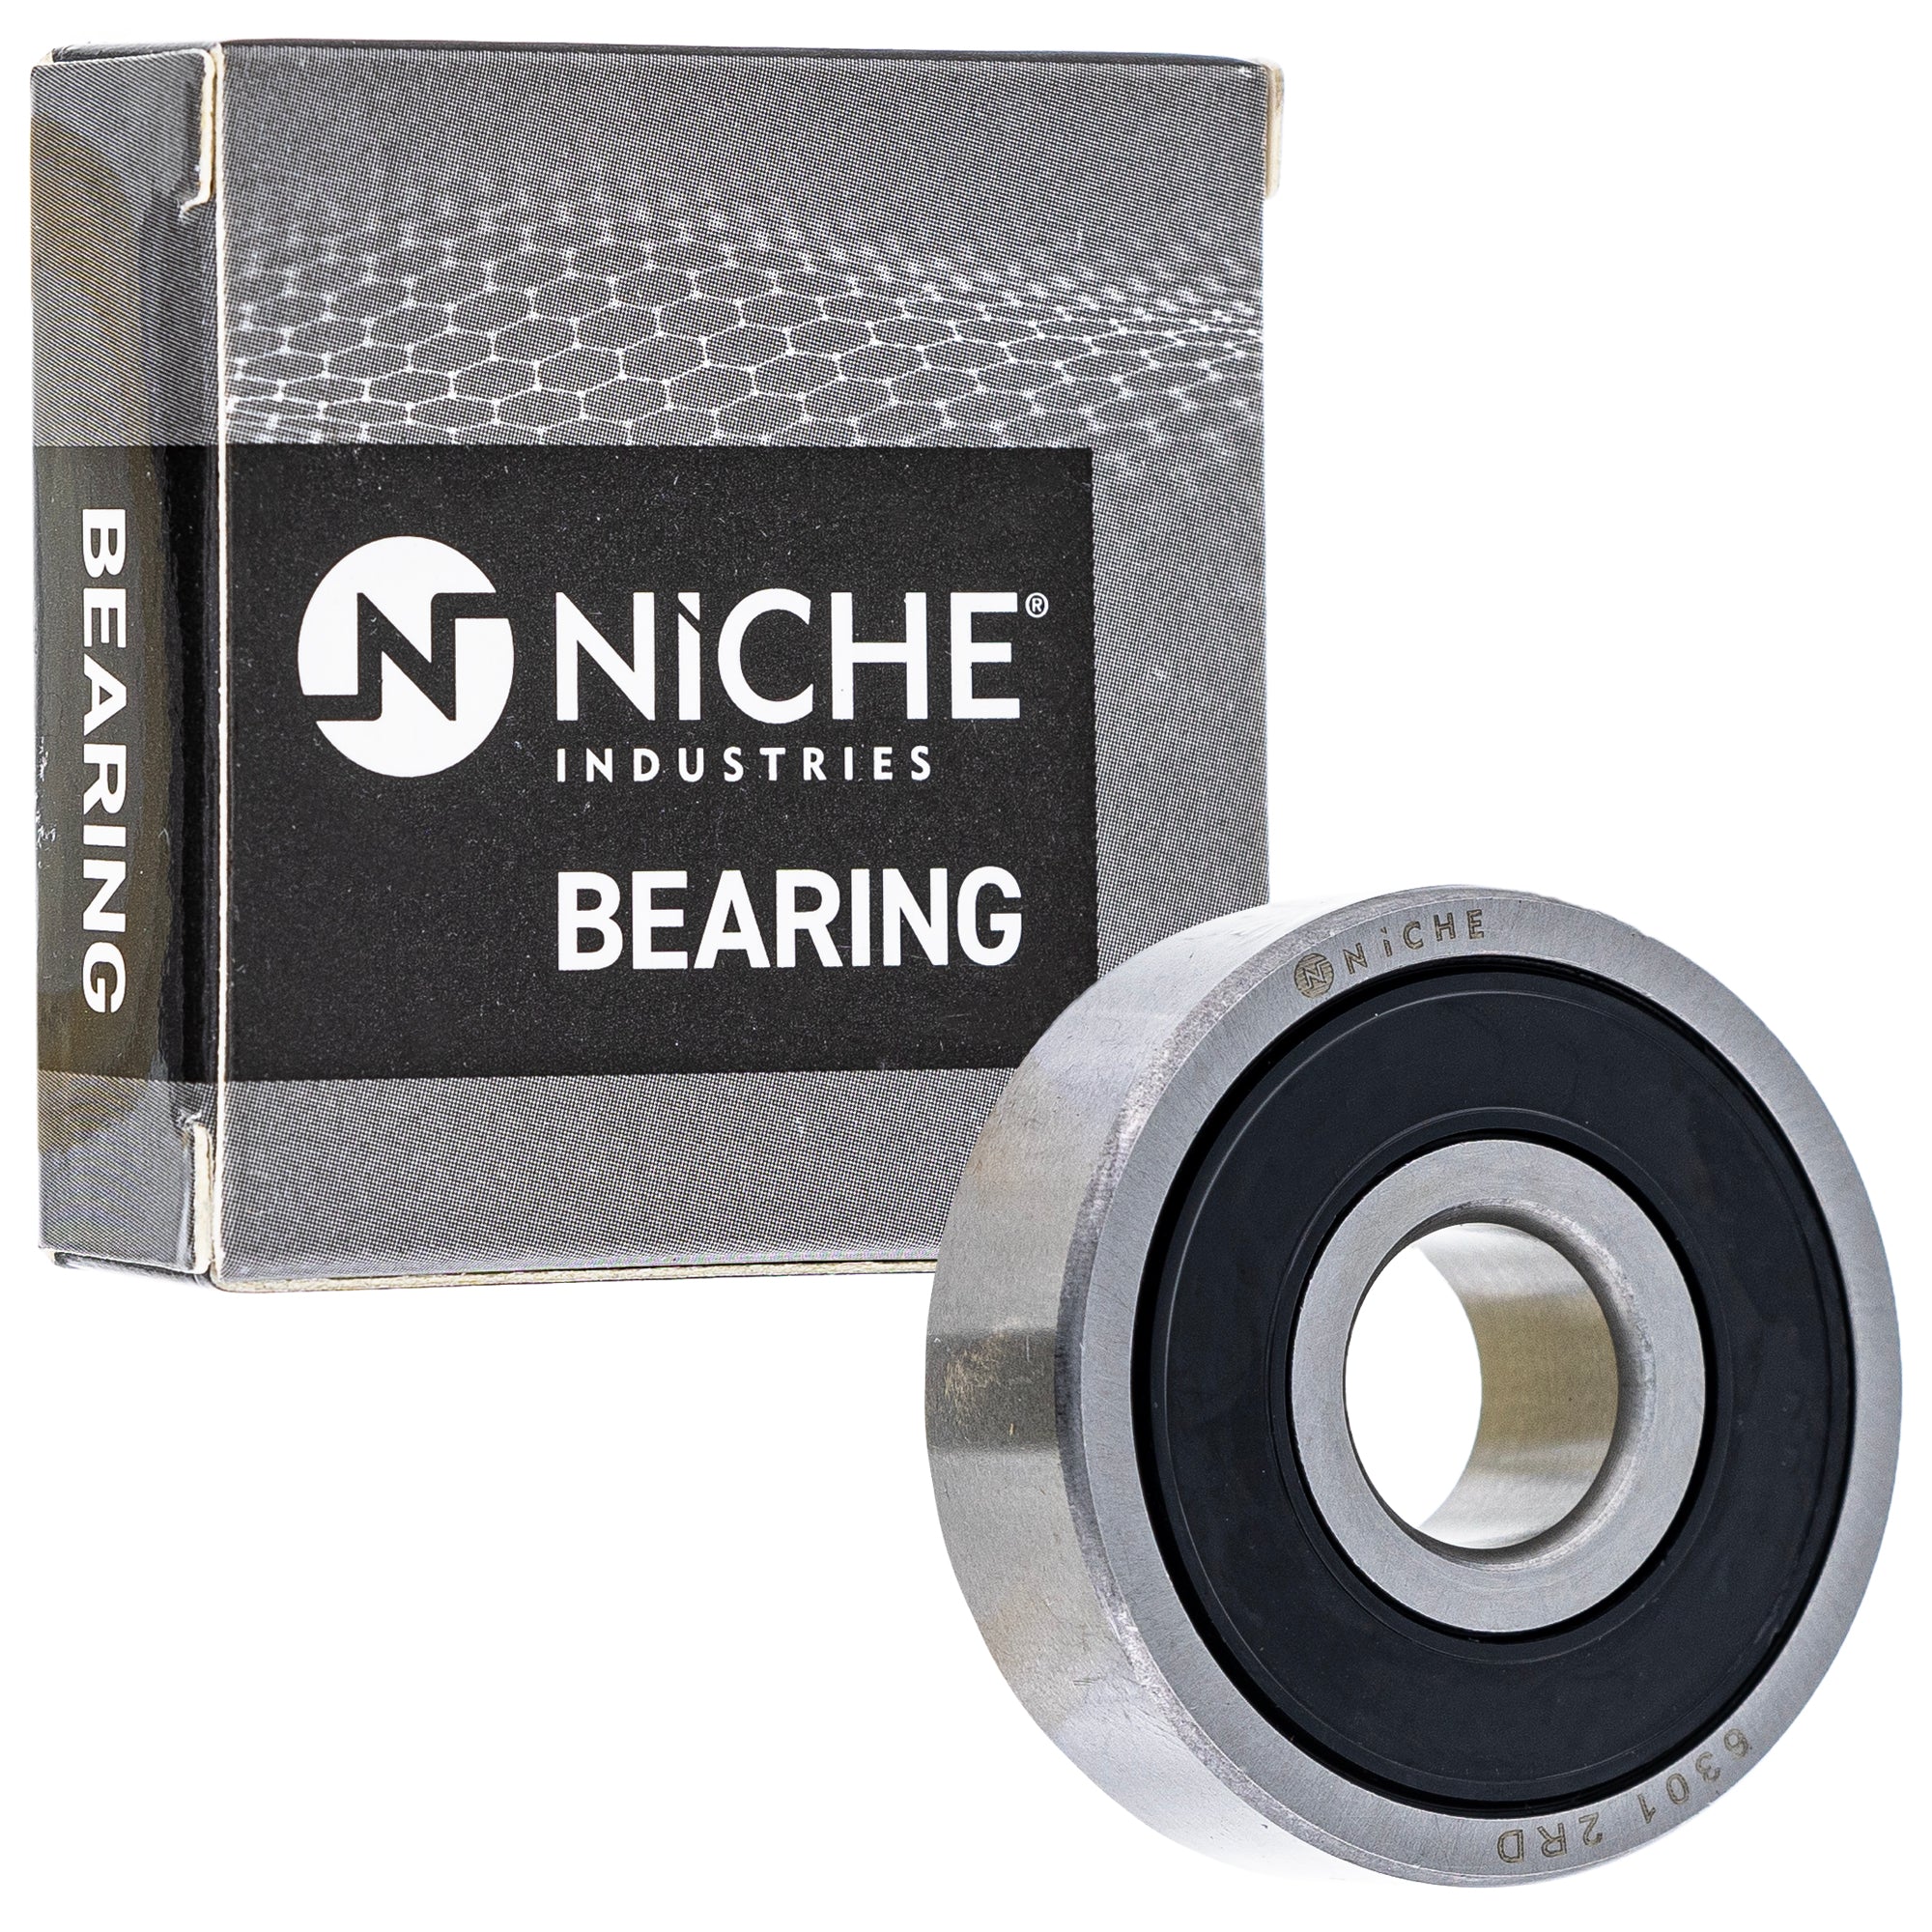 NICHE 519-CBB2342R Bearing for zOTHER XR80R XR80 XR75 XR70R